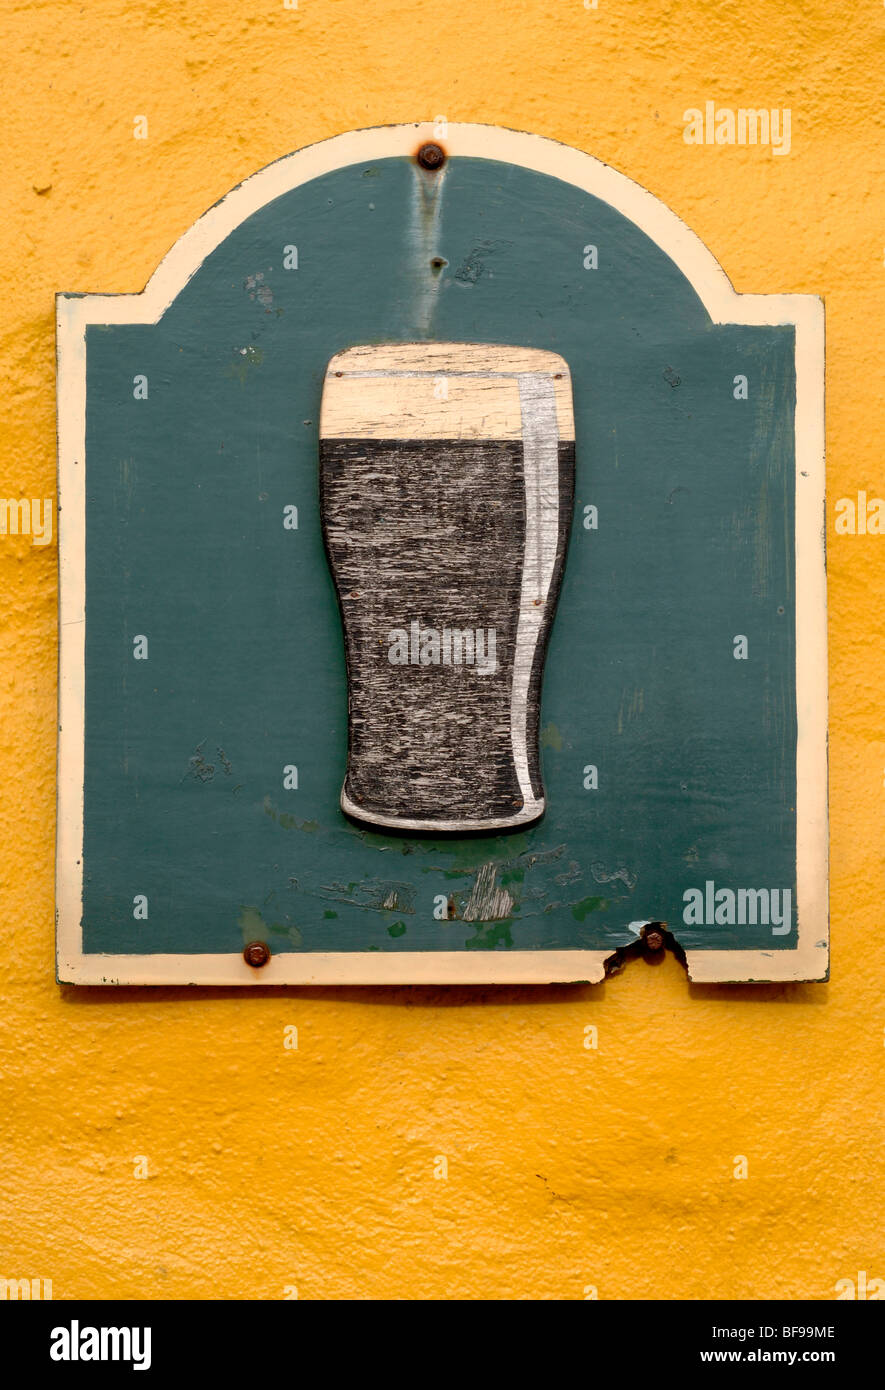 traditional Irish pub signs in southwest Ireland Stock Photo